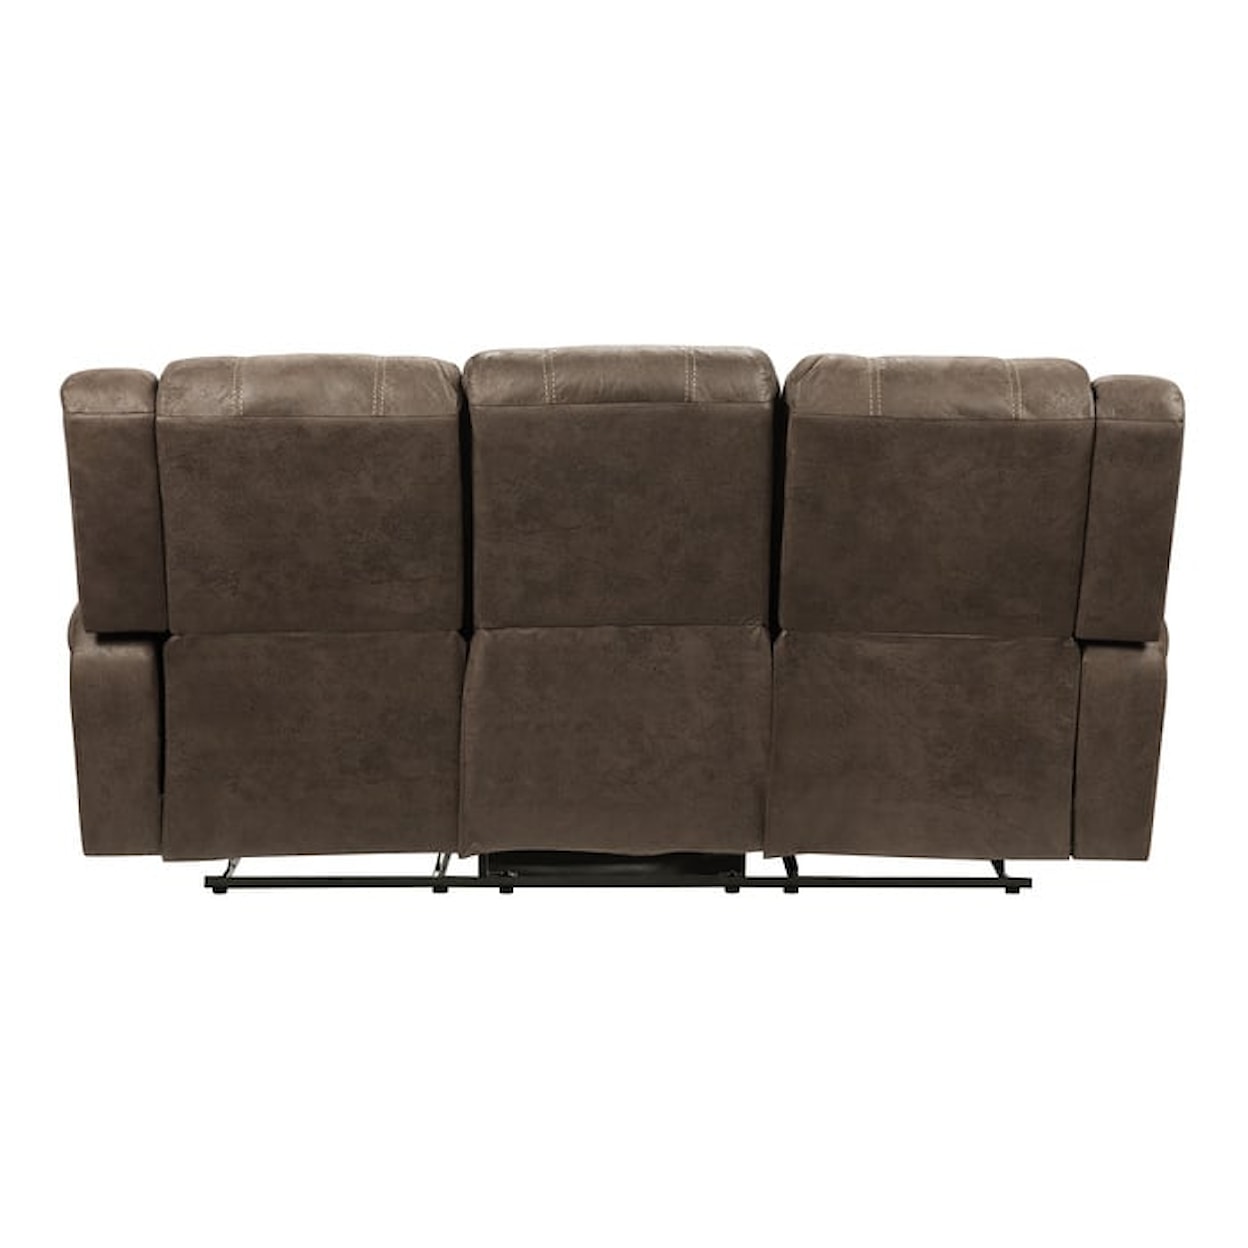 Homelegance Furniture Creighton Double Reclining Sofa